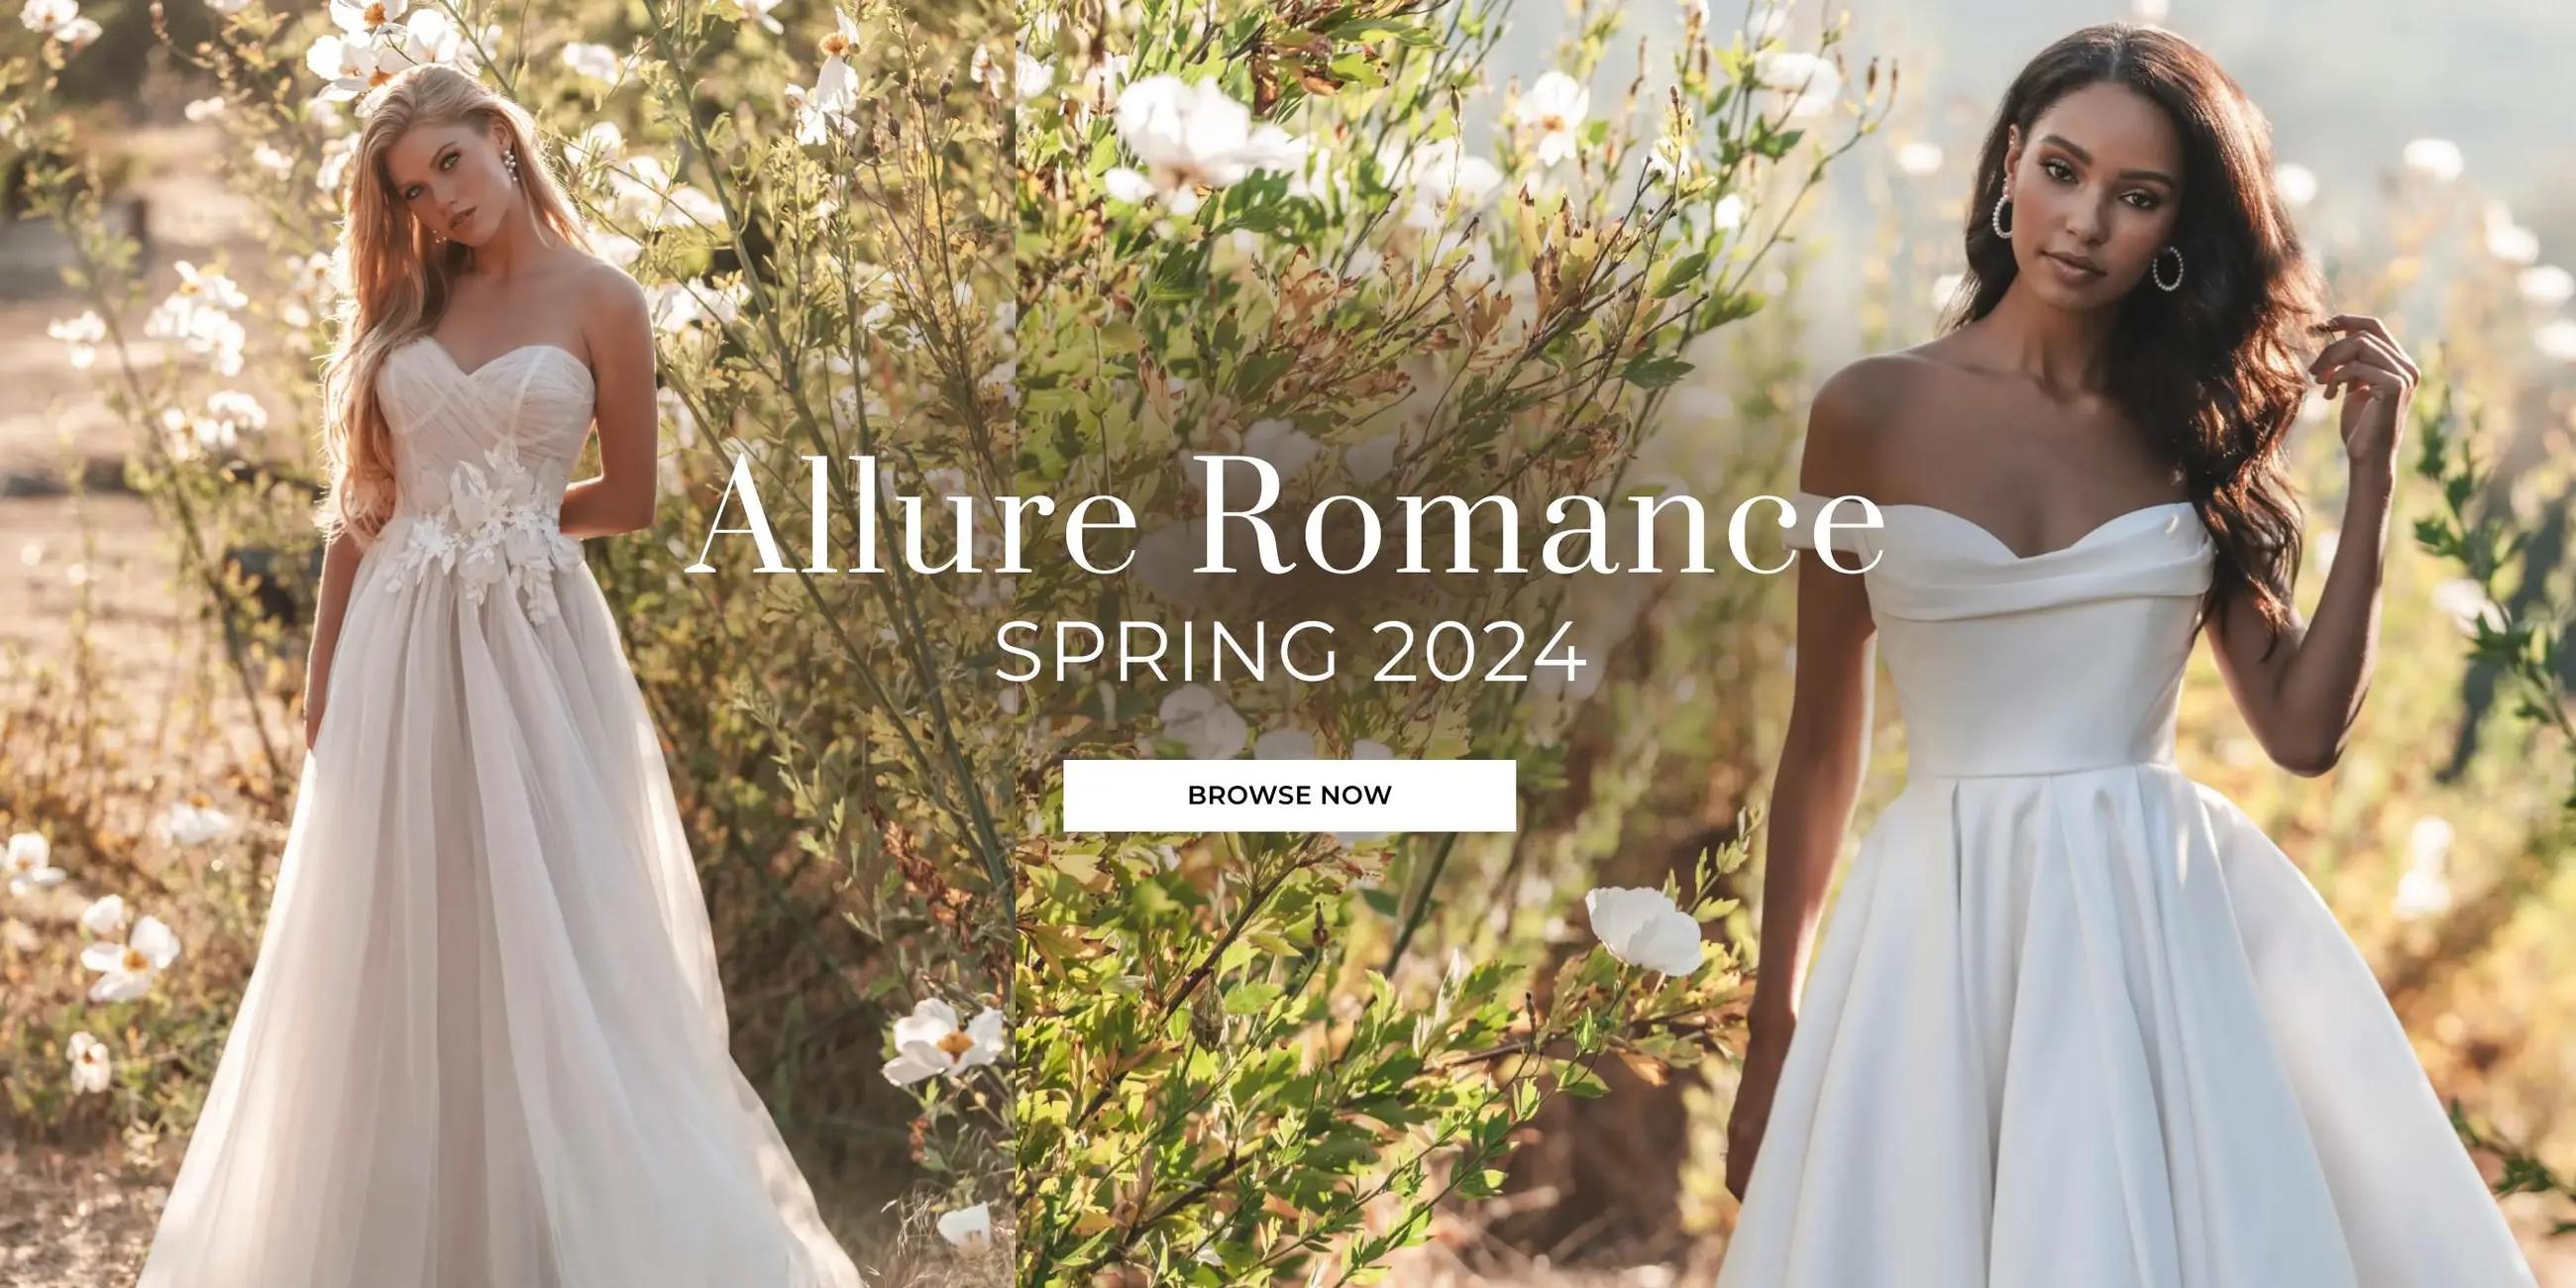 Allure Romance Spring 2024 banner desktop